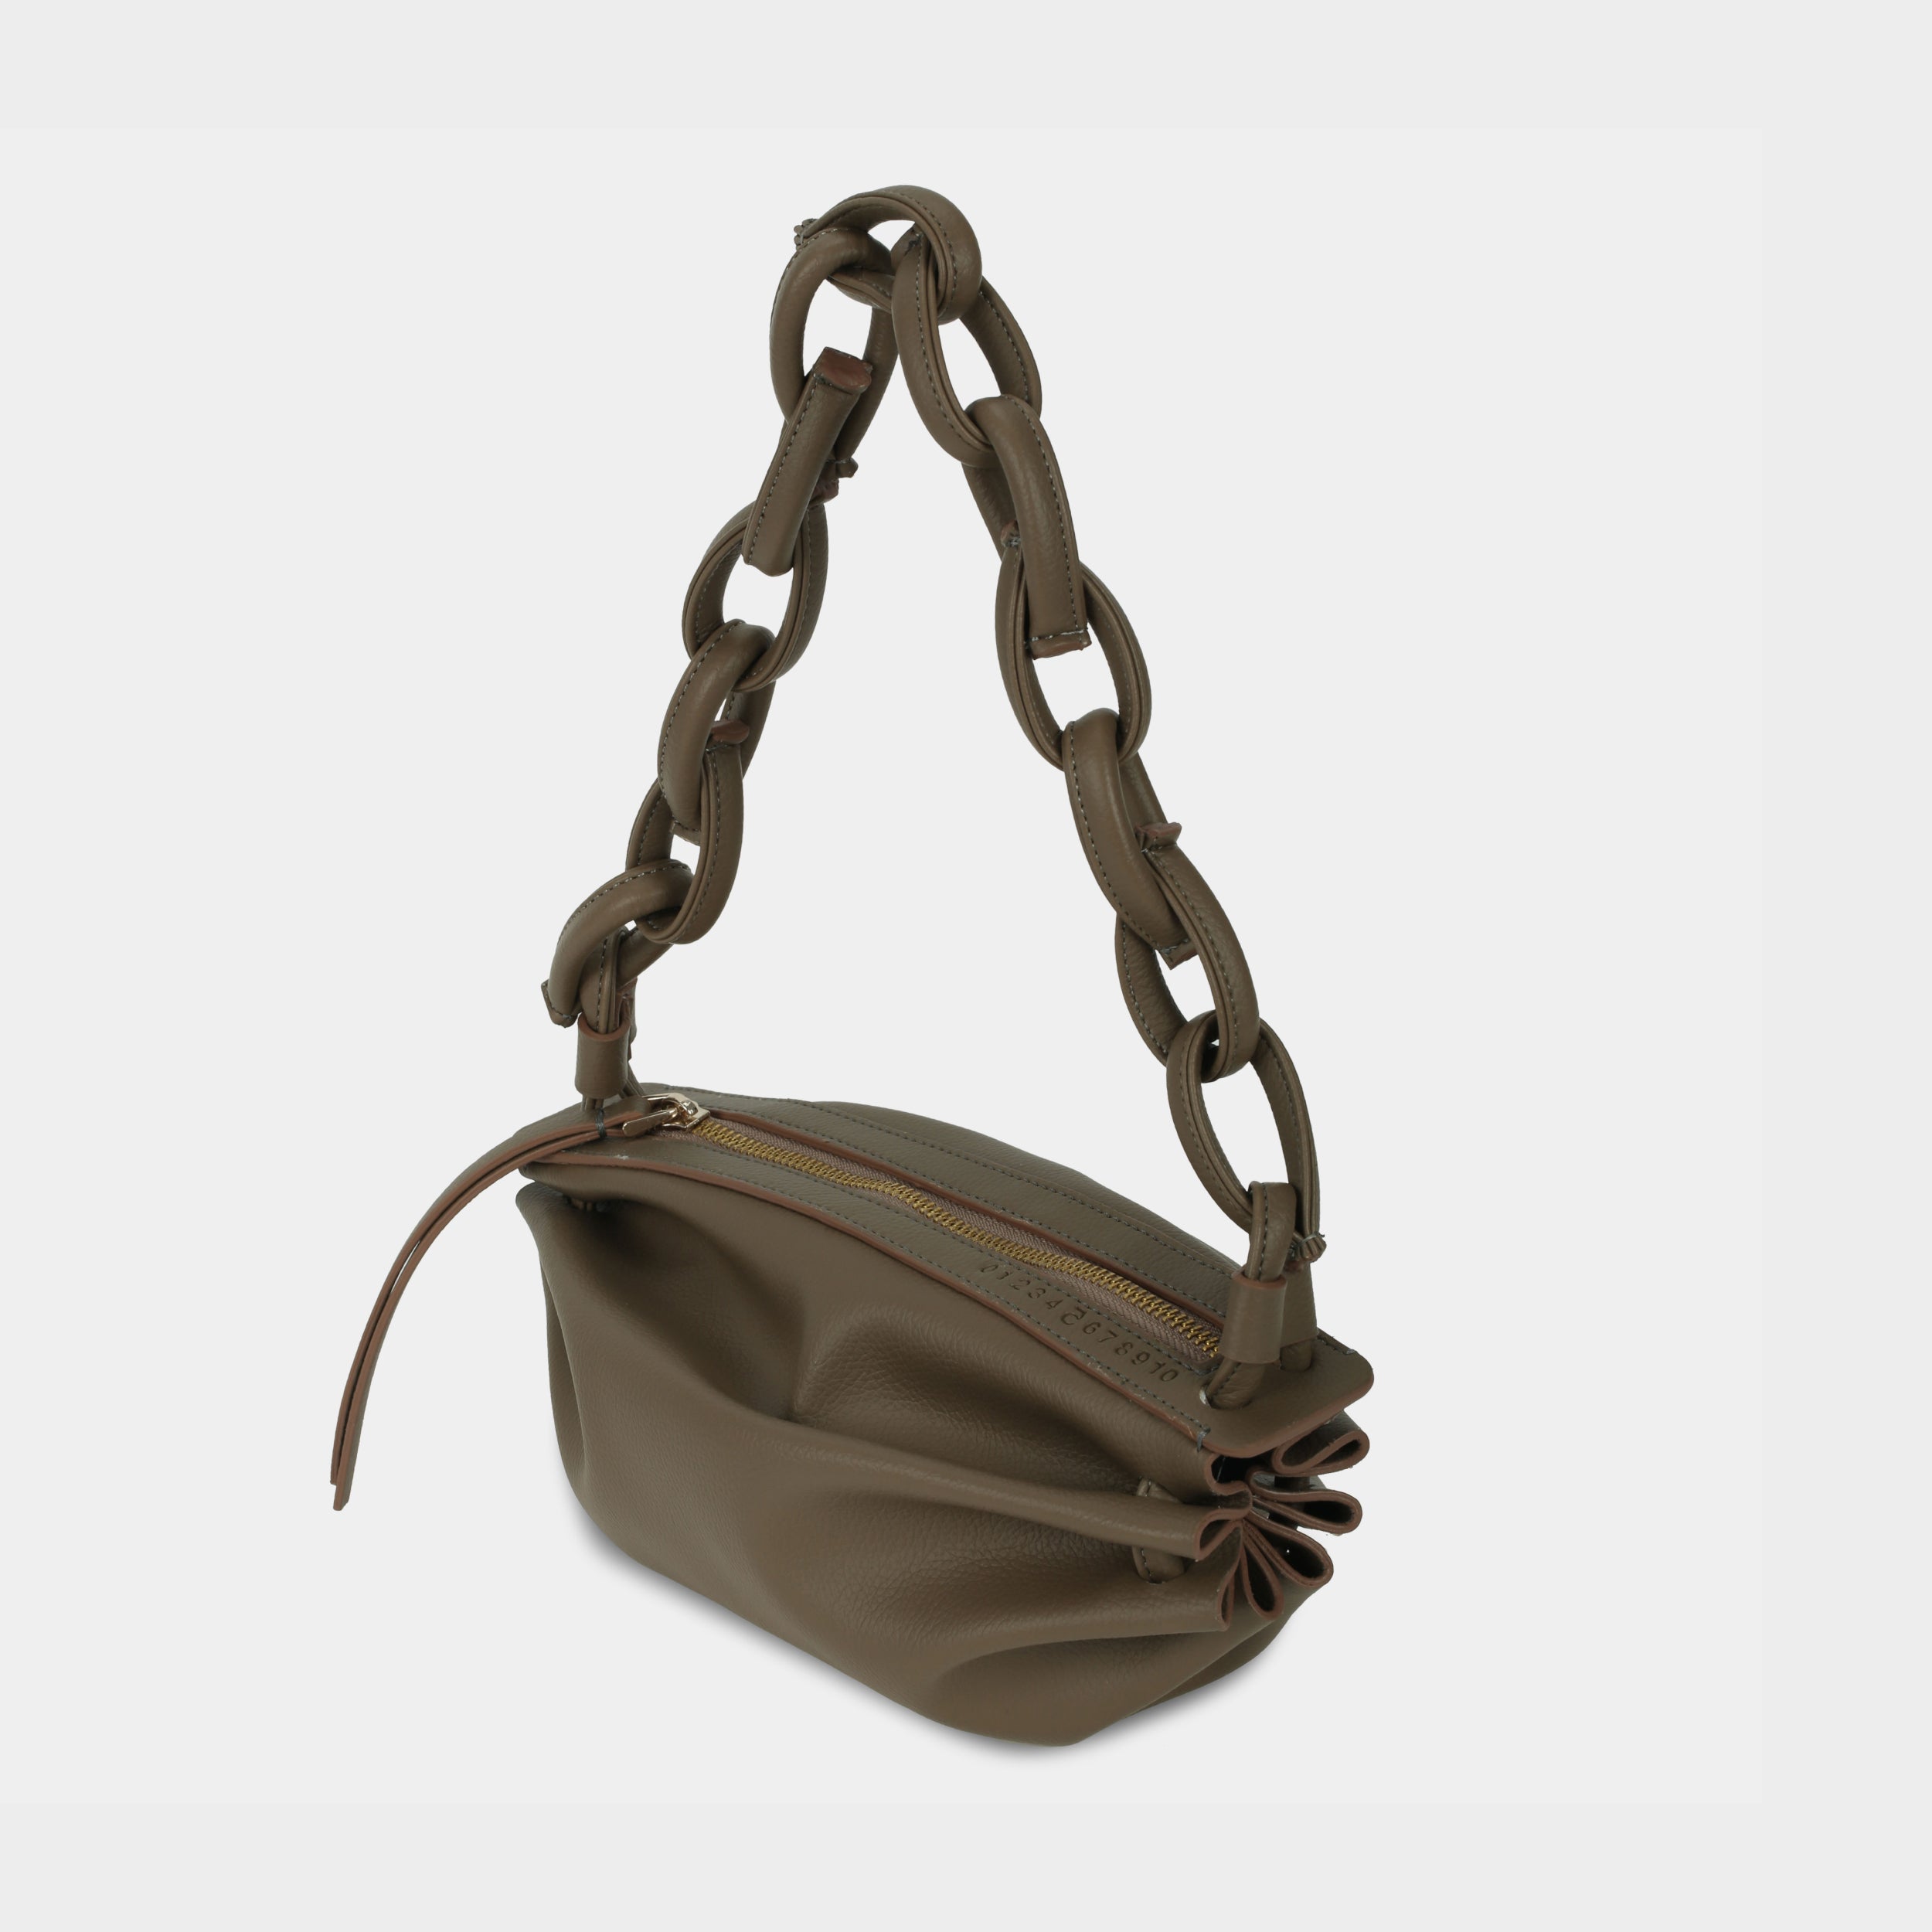 BOAT bag small size (S) dark beige color